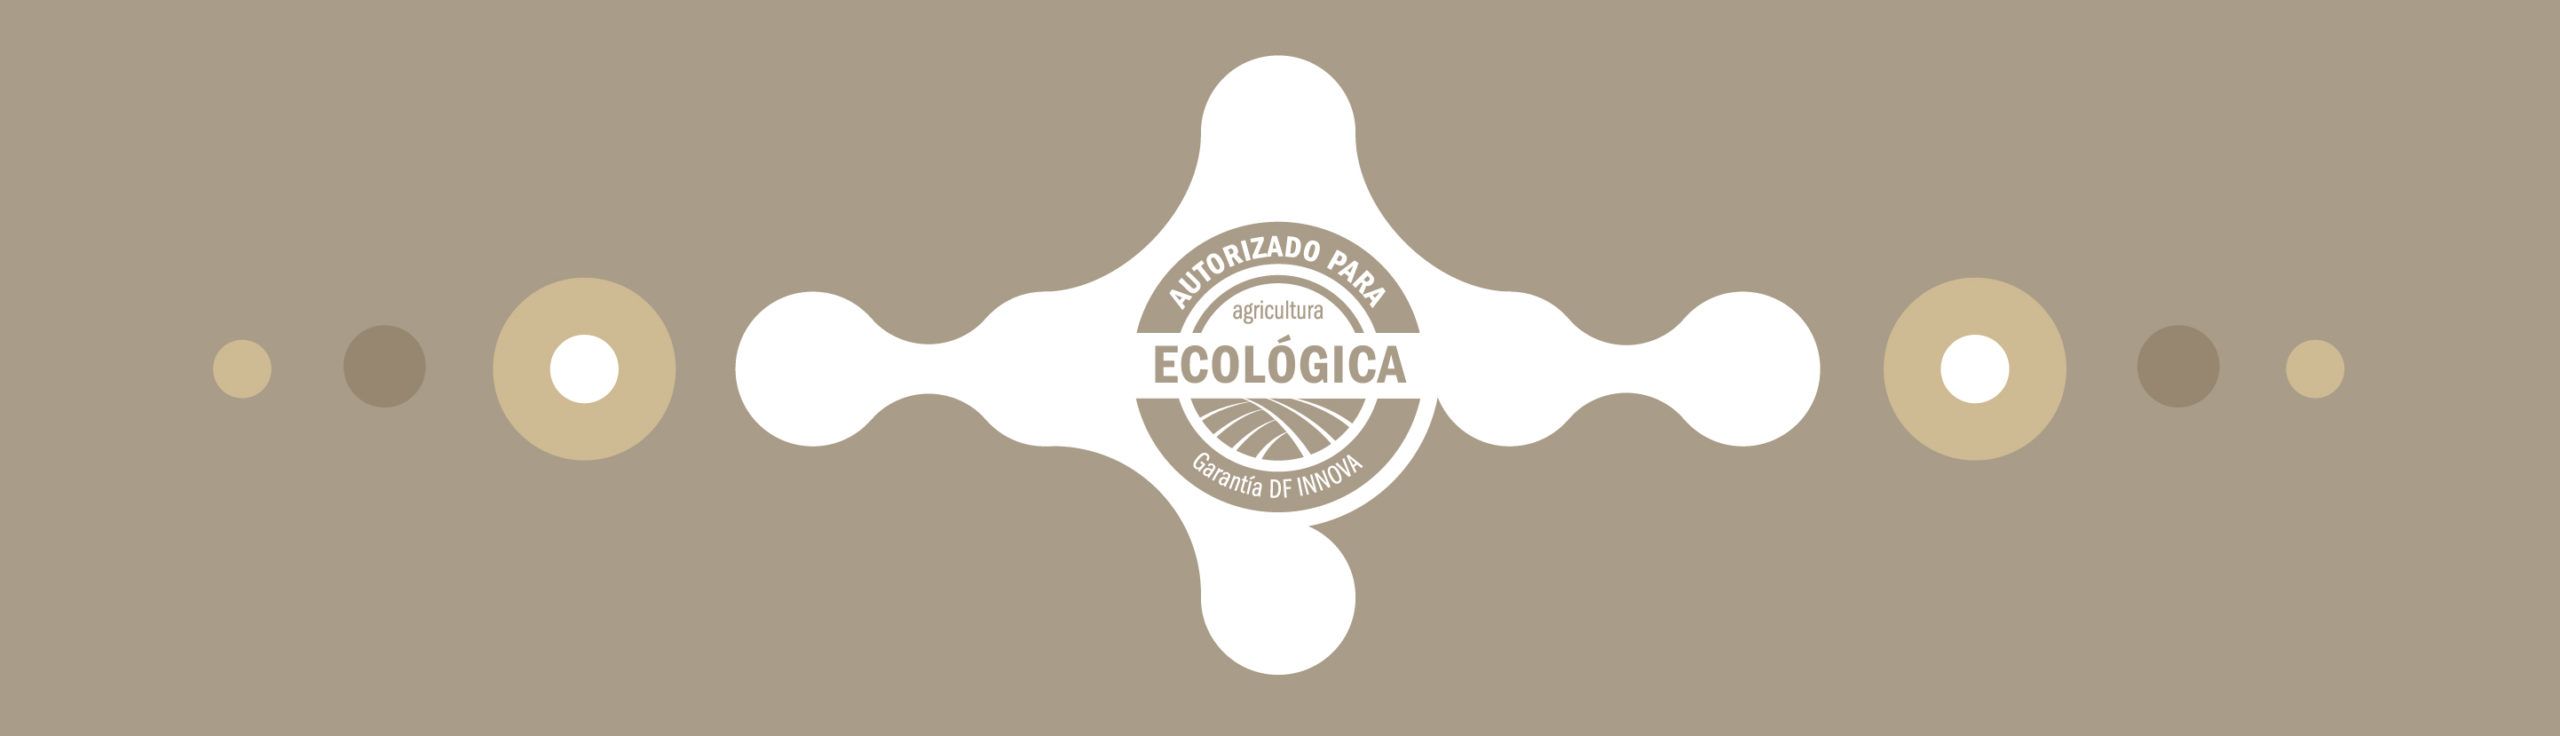 Fertilizantes ecológicos certificados